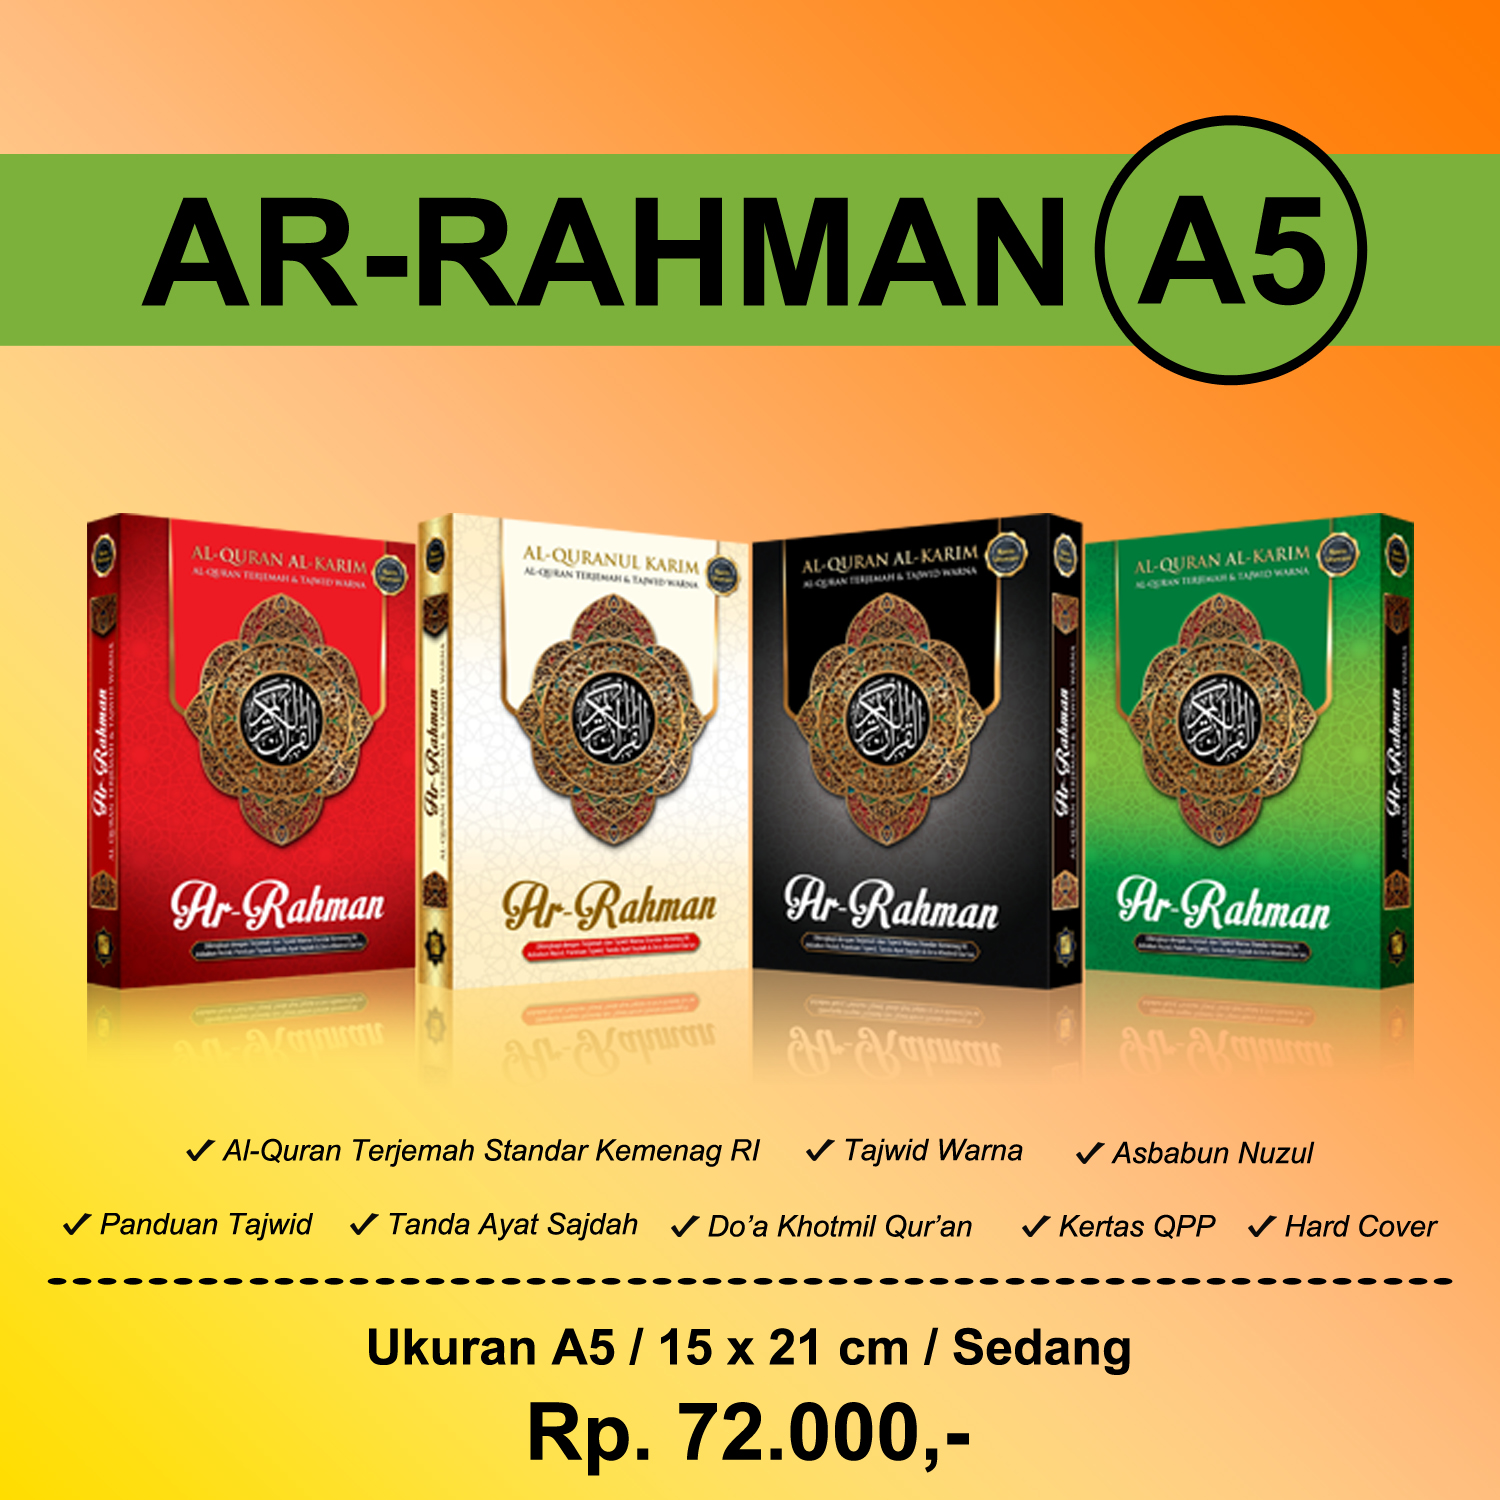 Al Quran Ar Rahman Tajwid Terjemah A5_AR-RAHMAN A5 NEW.jpg